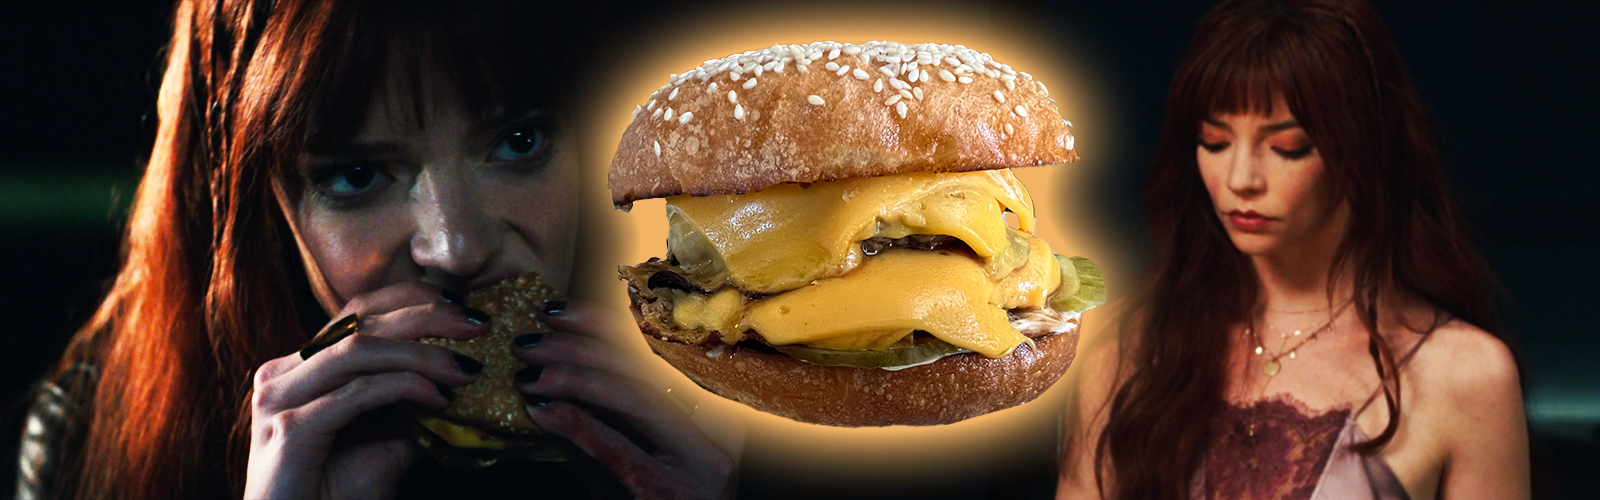 The Menu' Double Cheeseburger — Get the Recipe